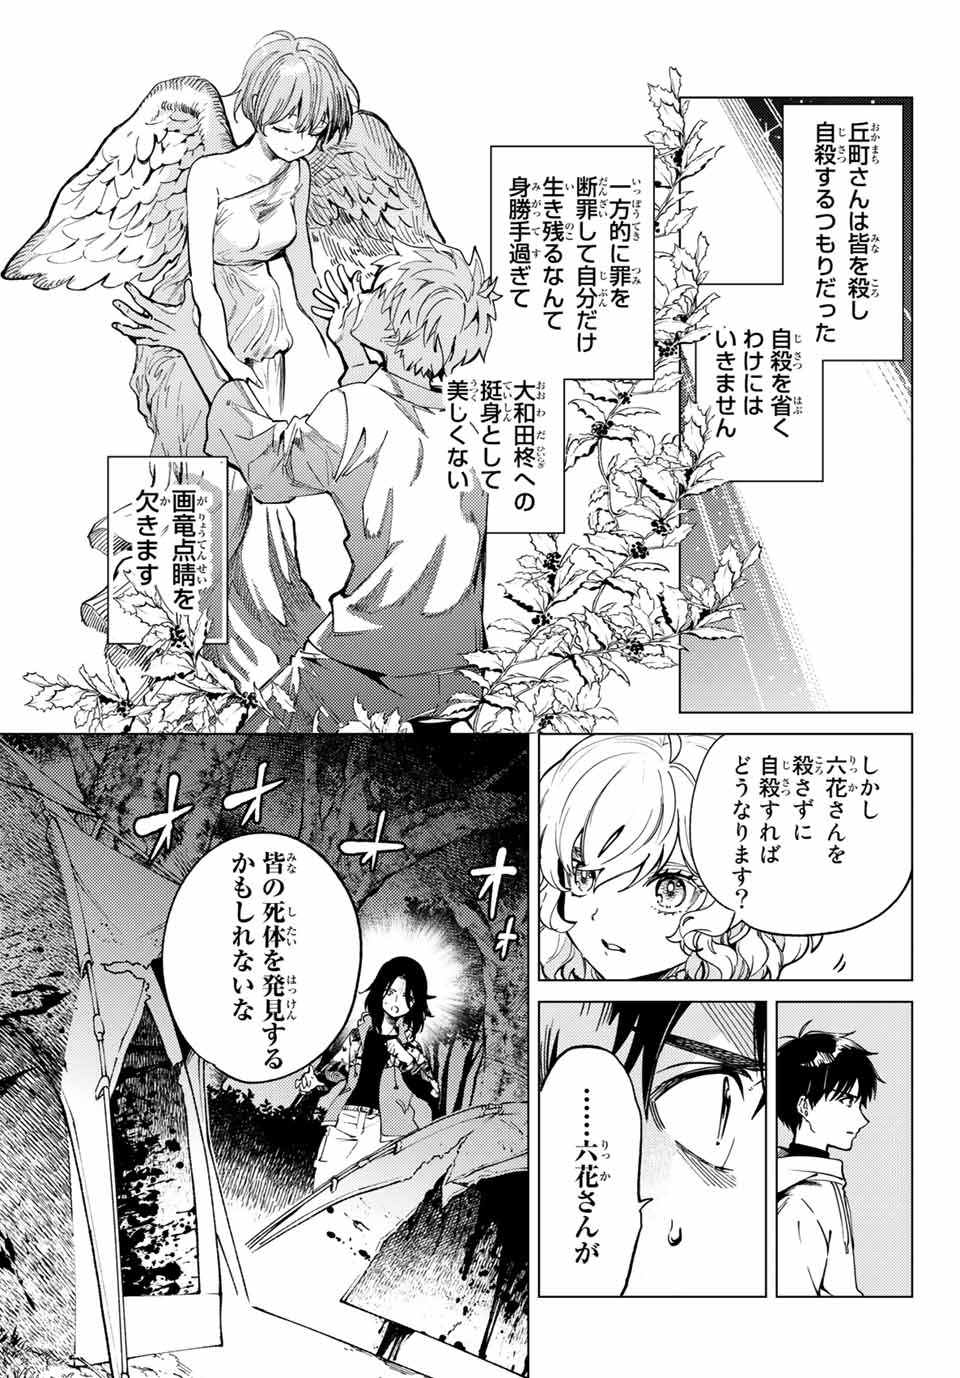 Kyokou Suiri - Chapter 48.2 - Page 1